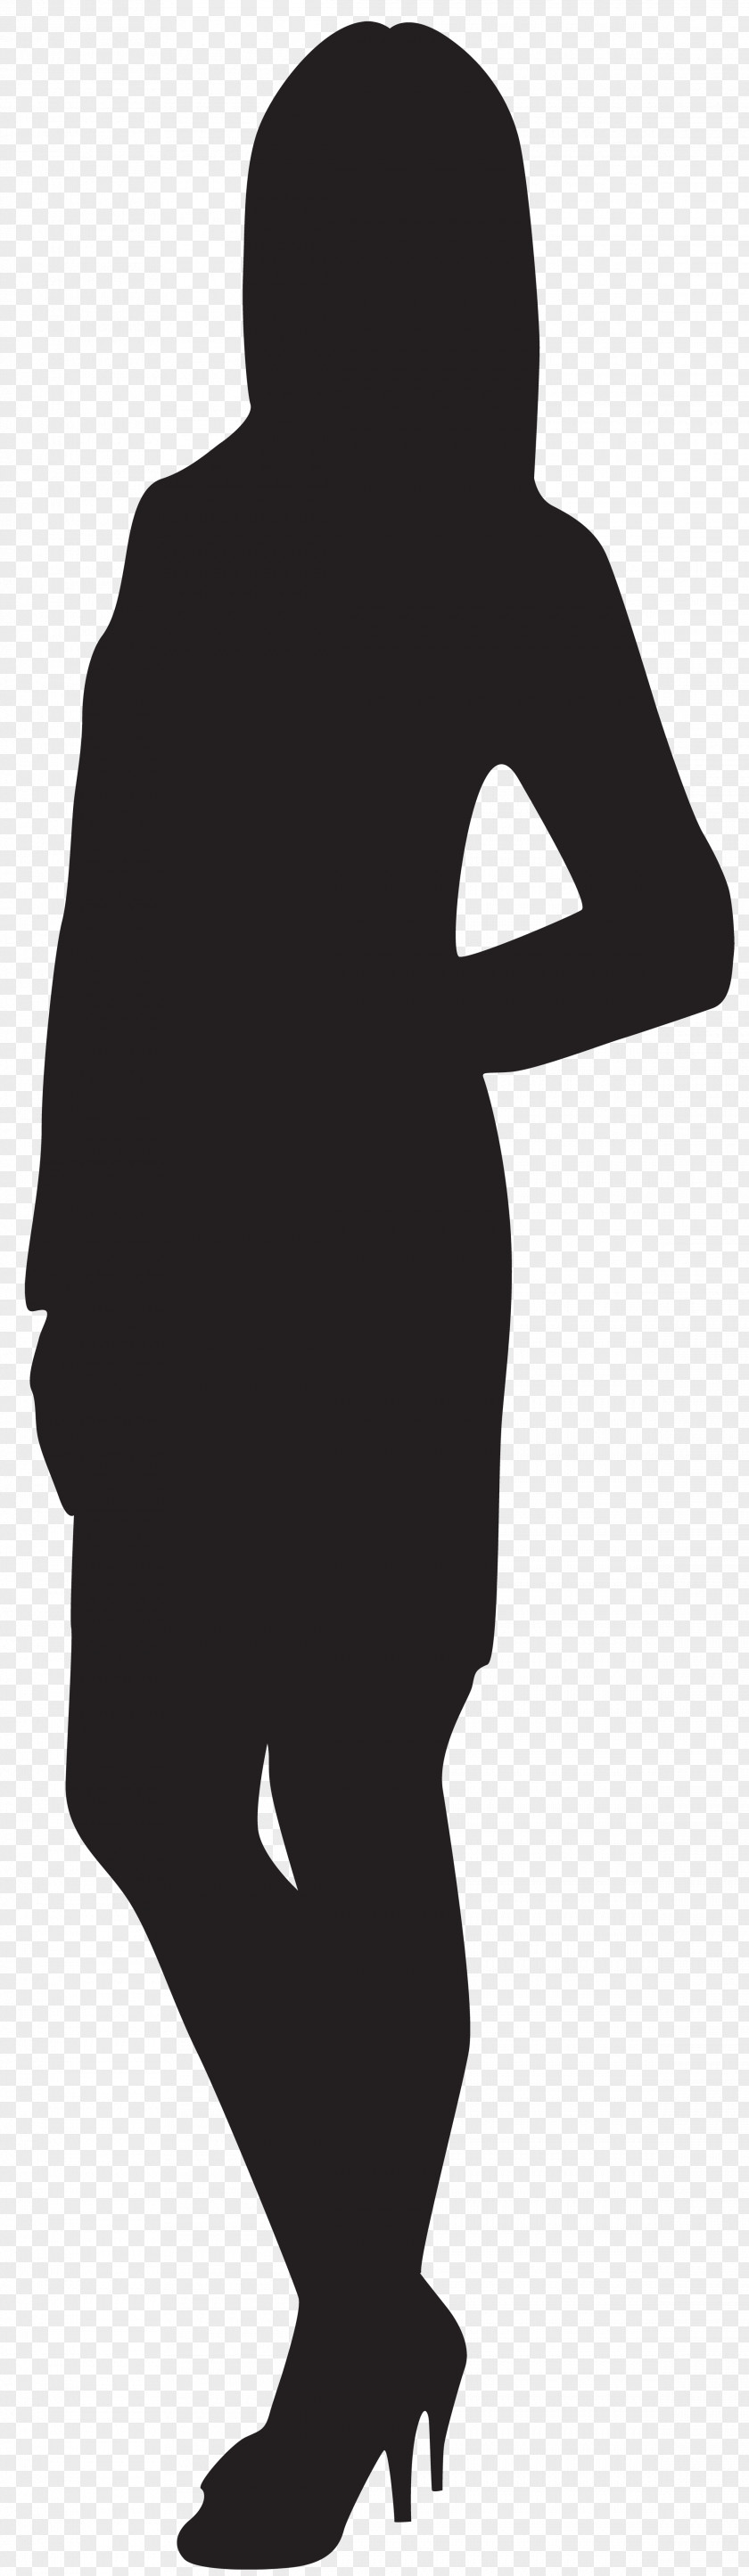 Female Silhouette Clip Art Image Black And White Homo Sapiens Standing Human Behavior PNG